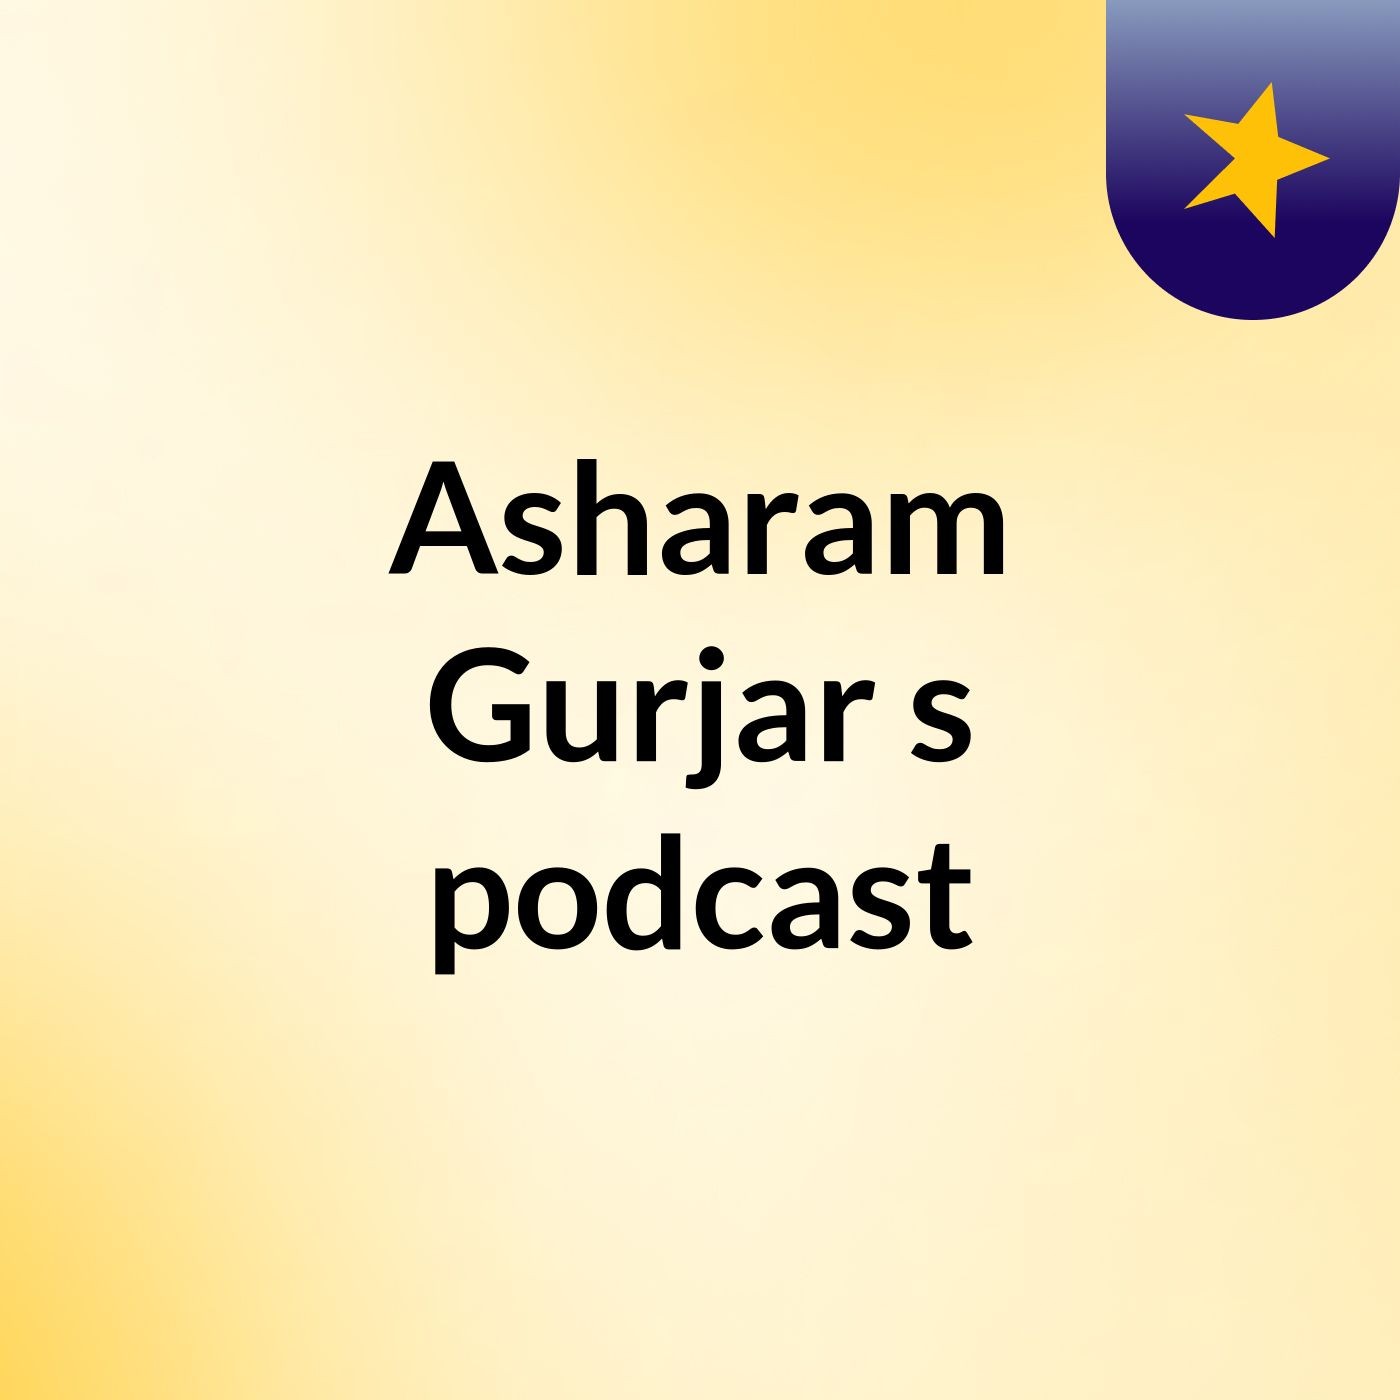 Asharam Gurjar's podcast